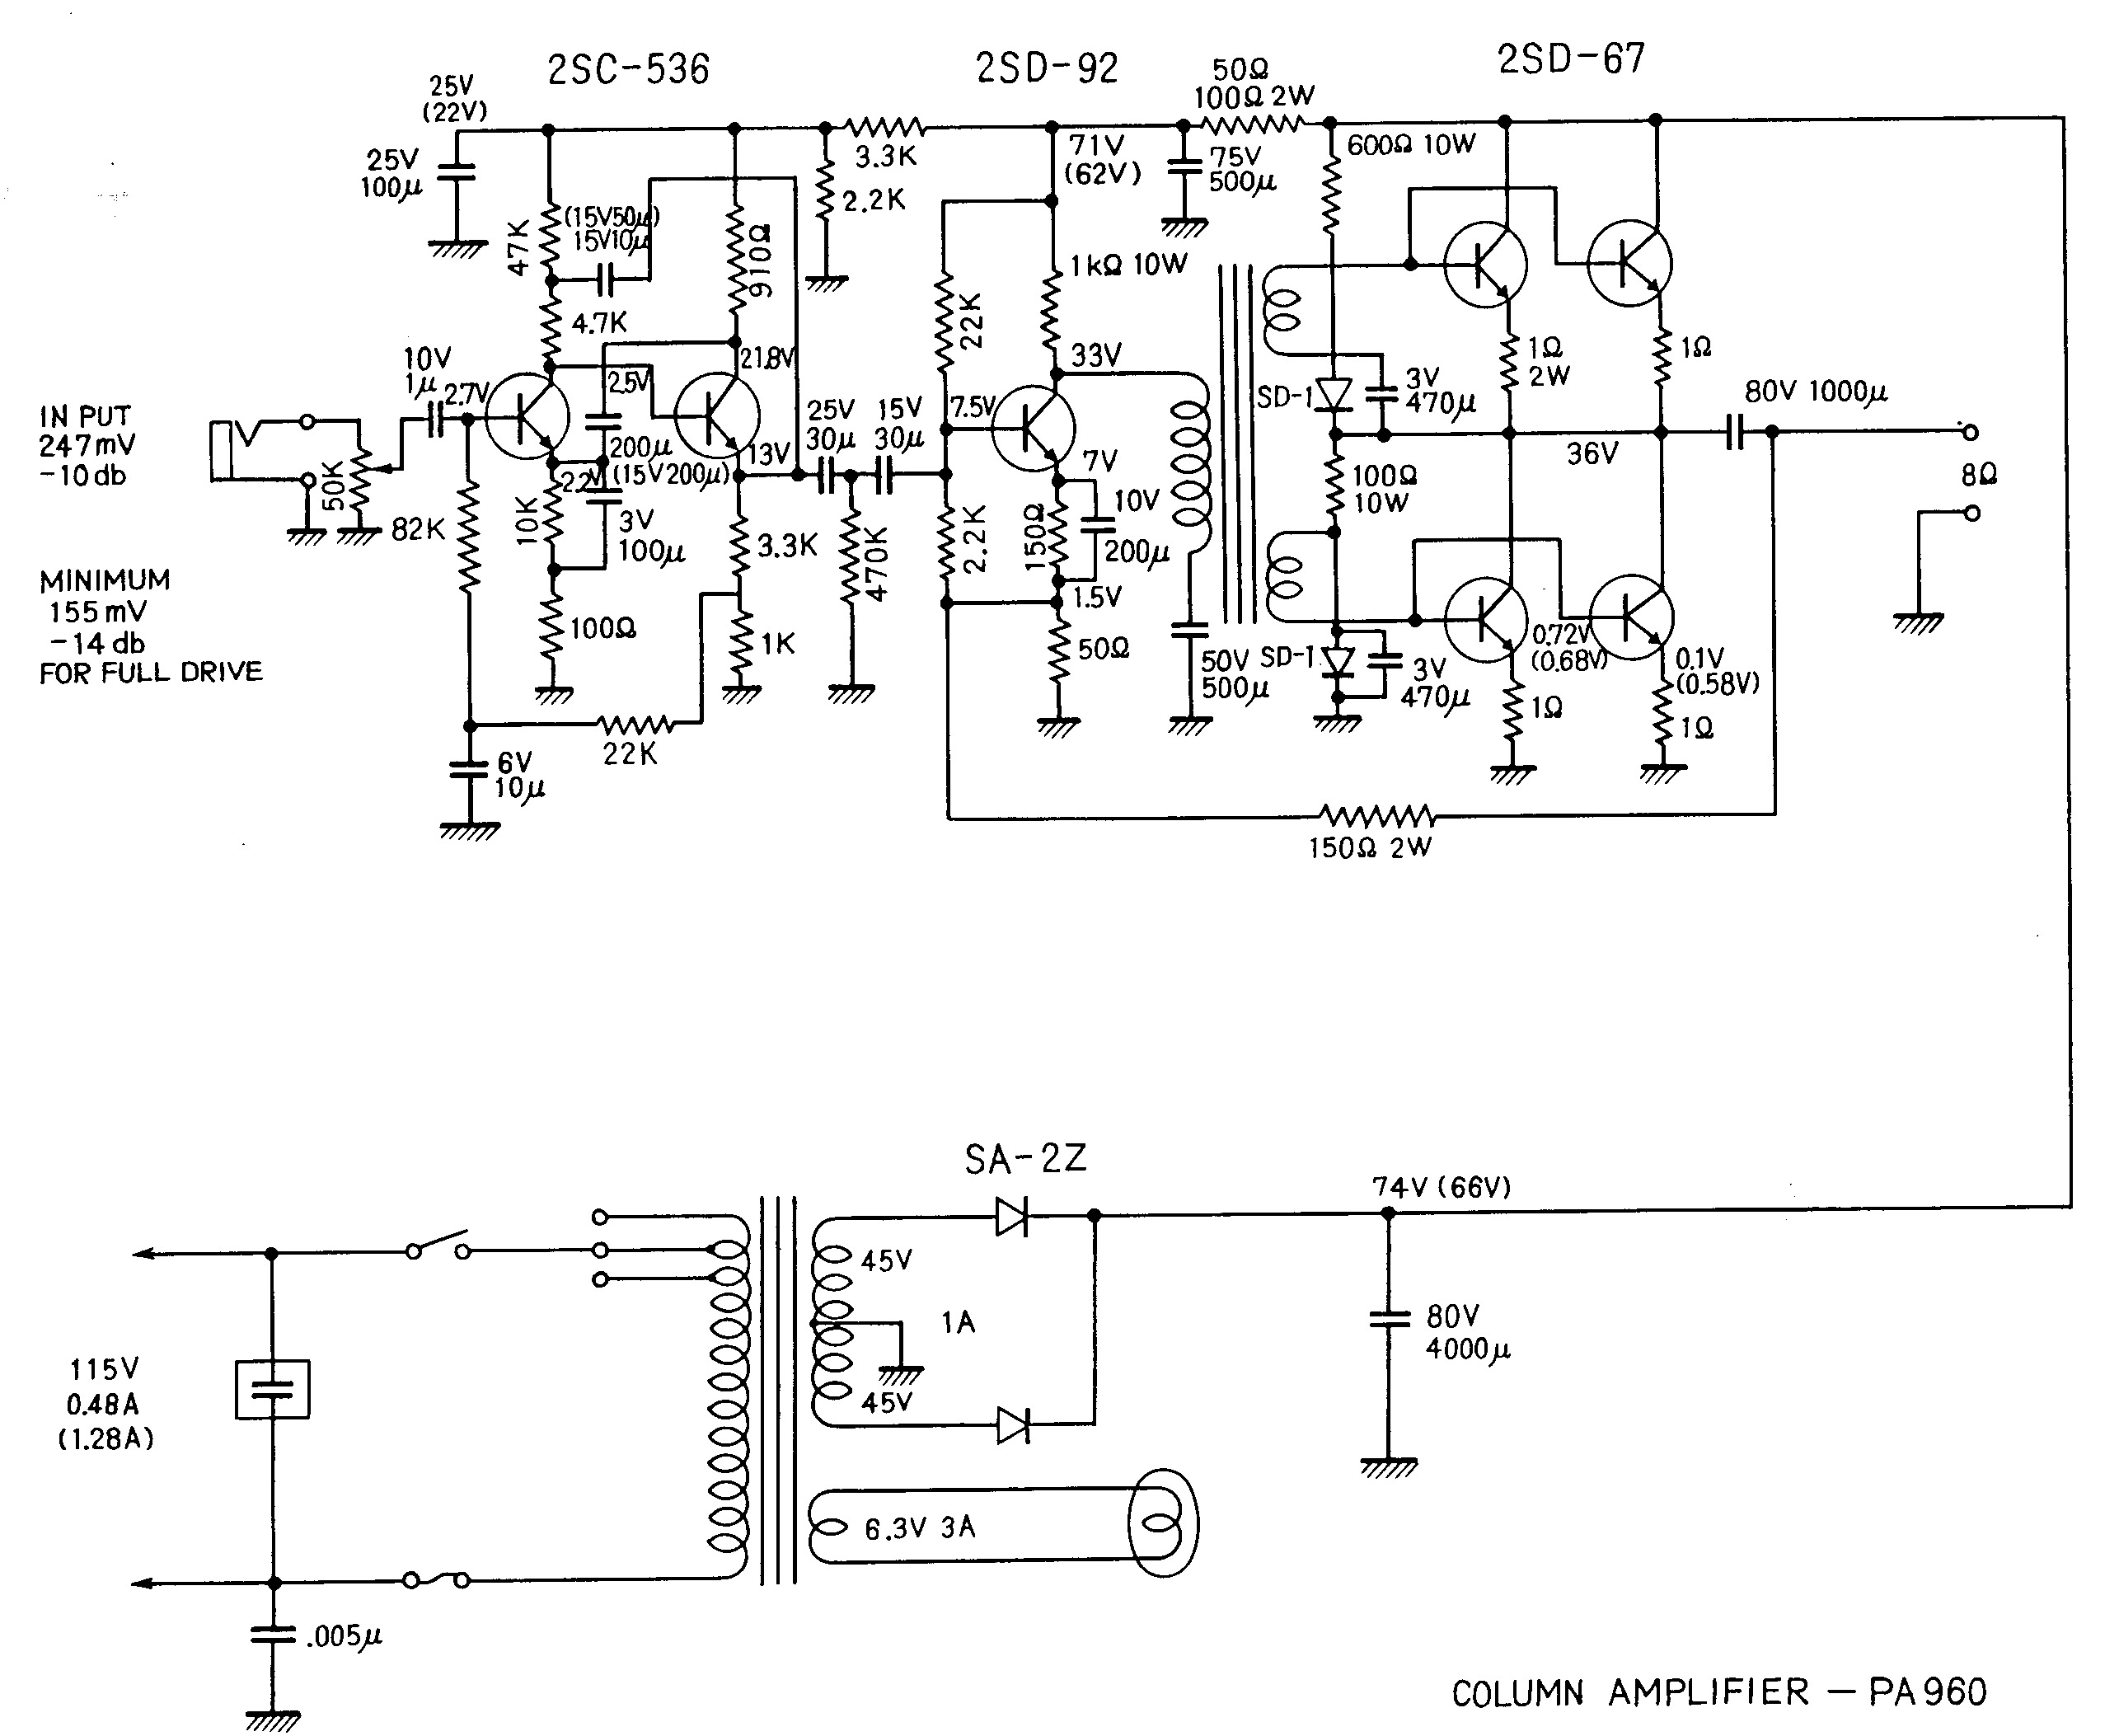 Univox PA-960 Column Amplifier Schematic.gif